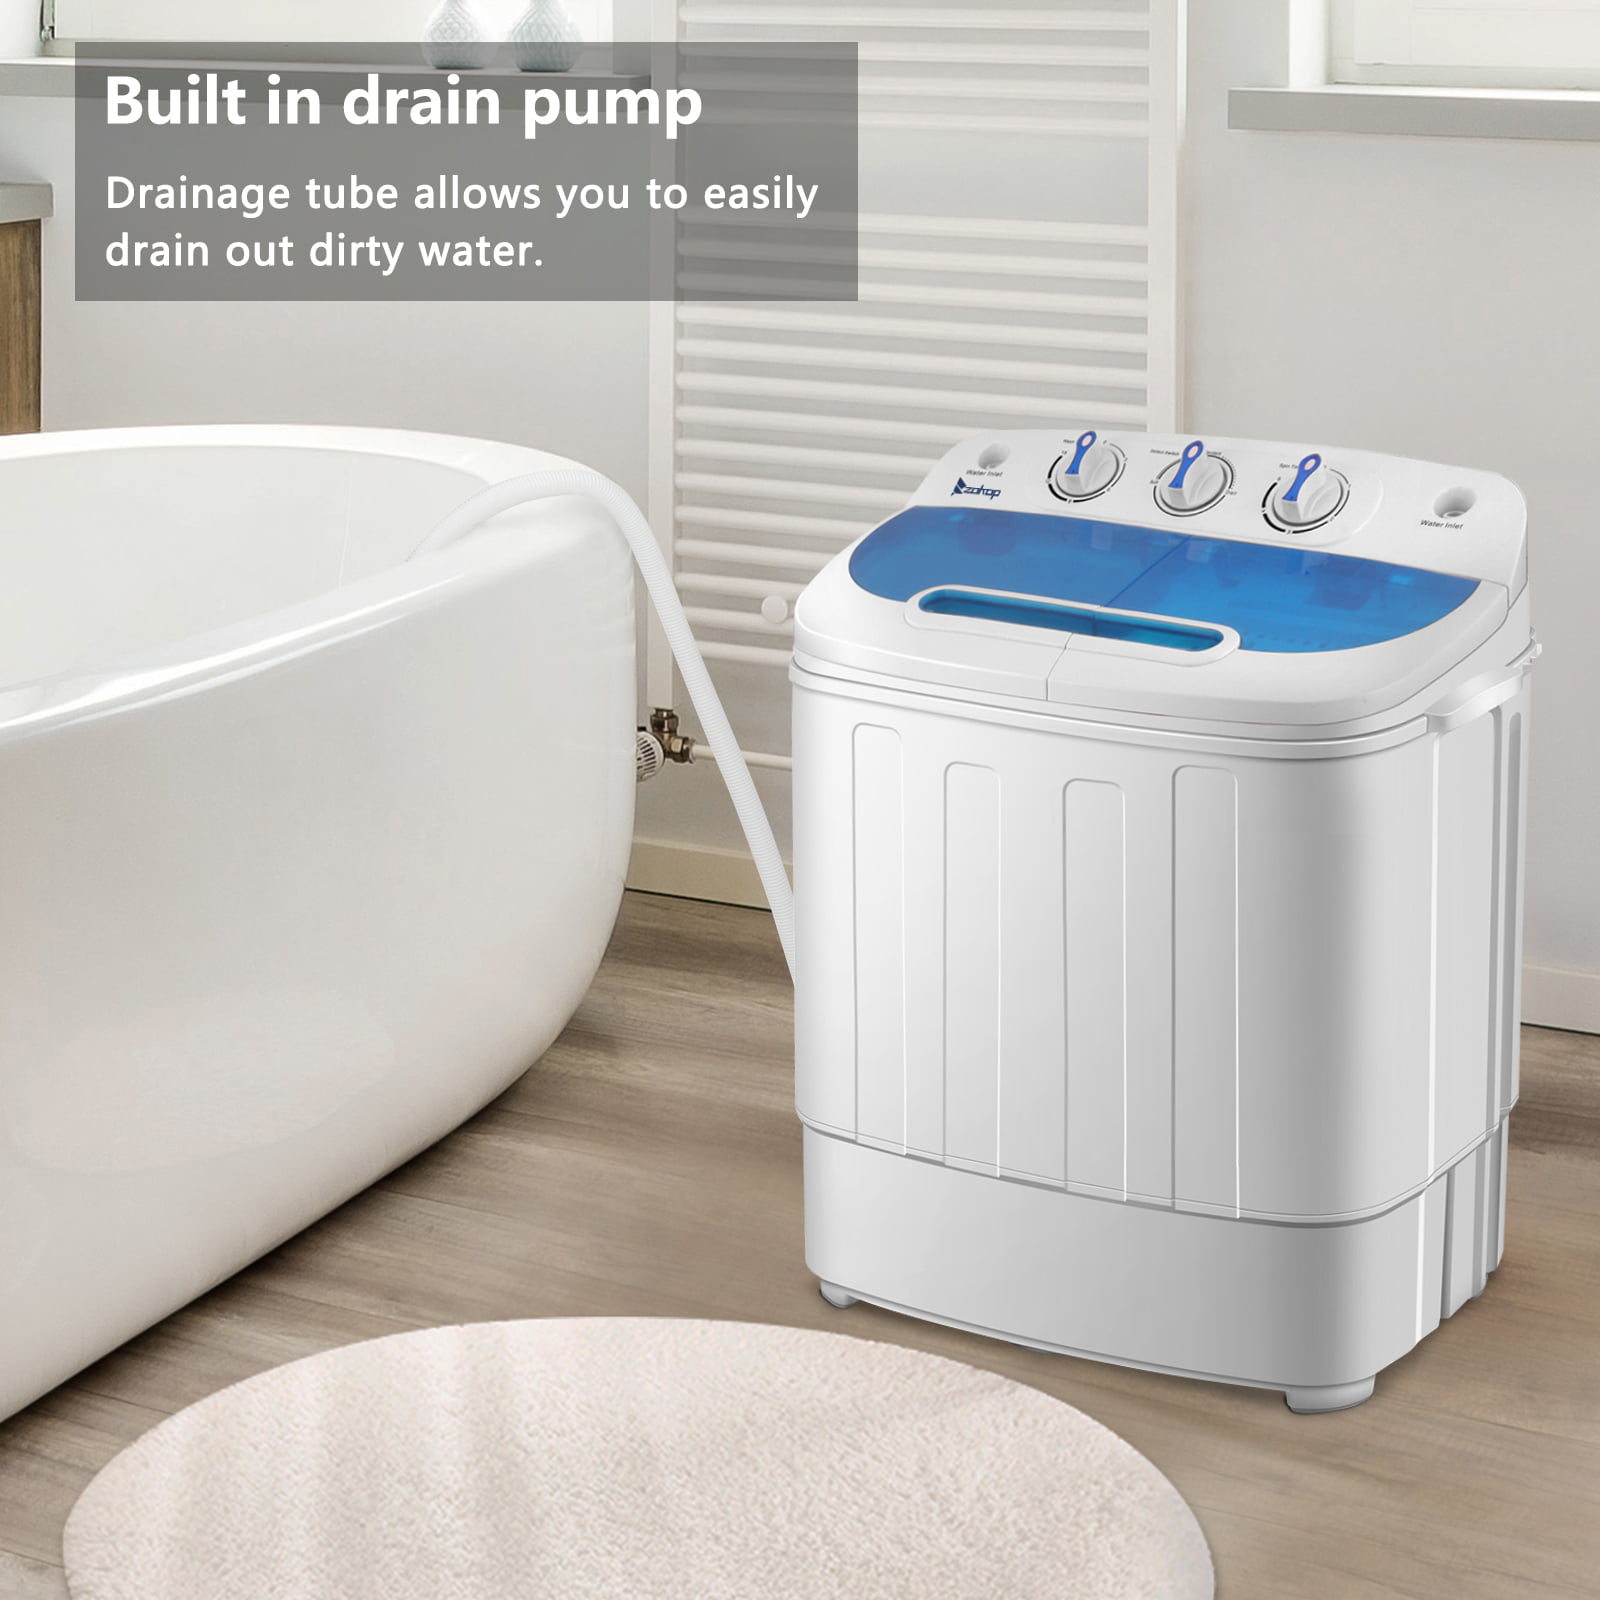 BBBuy Mini Portable Washing Machine, Twin Tub Compact Washing Machine w/Washer Spinner Gravity Drain Pump and Drain Hose 